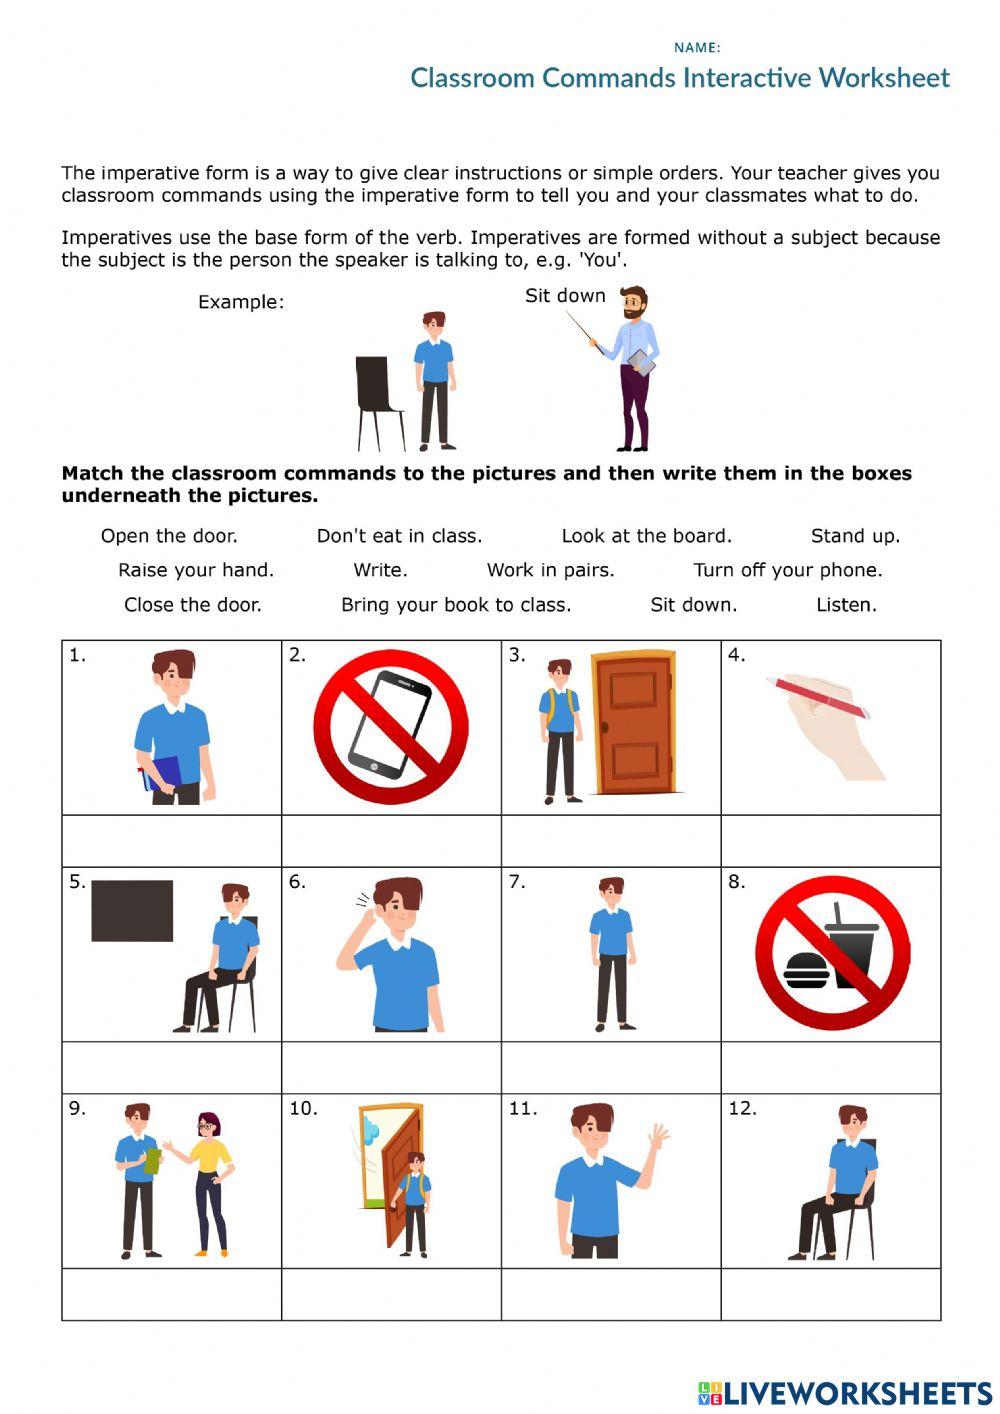 Classroom instrutions